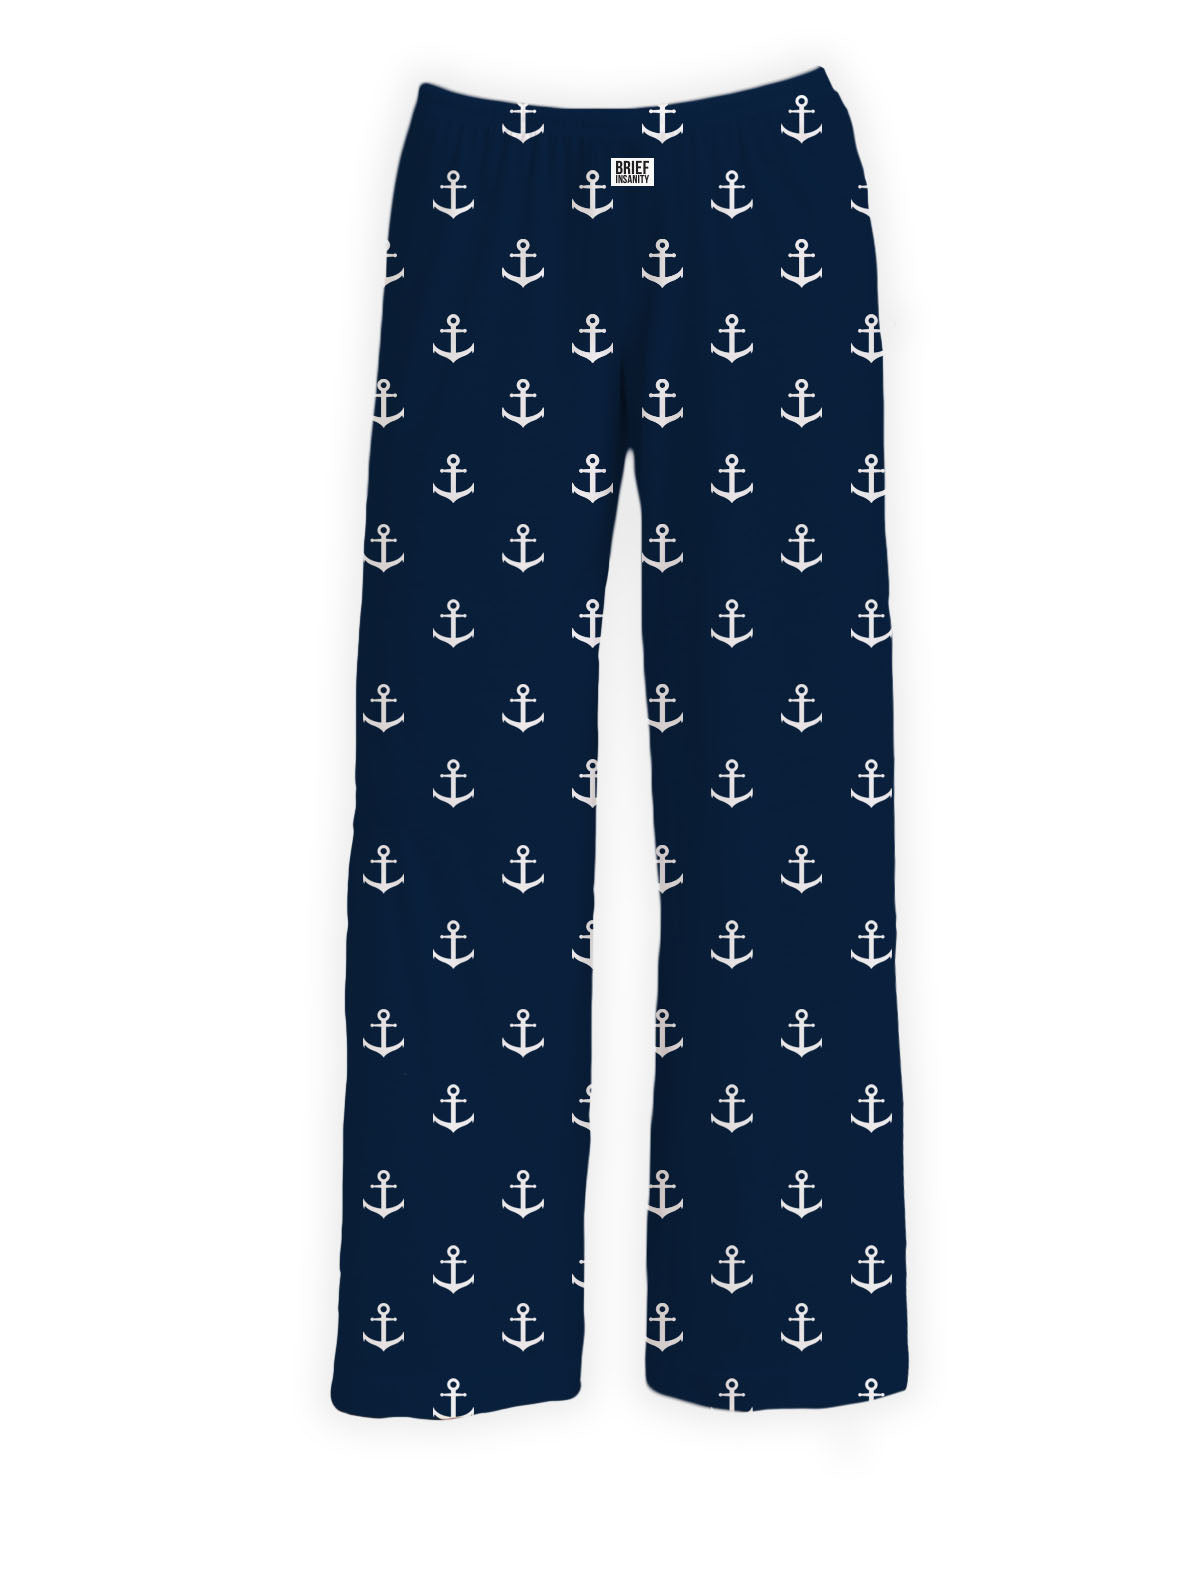 BRIEF INSANITY's Nautical Anchor Pajama Lounge Pants